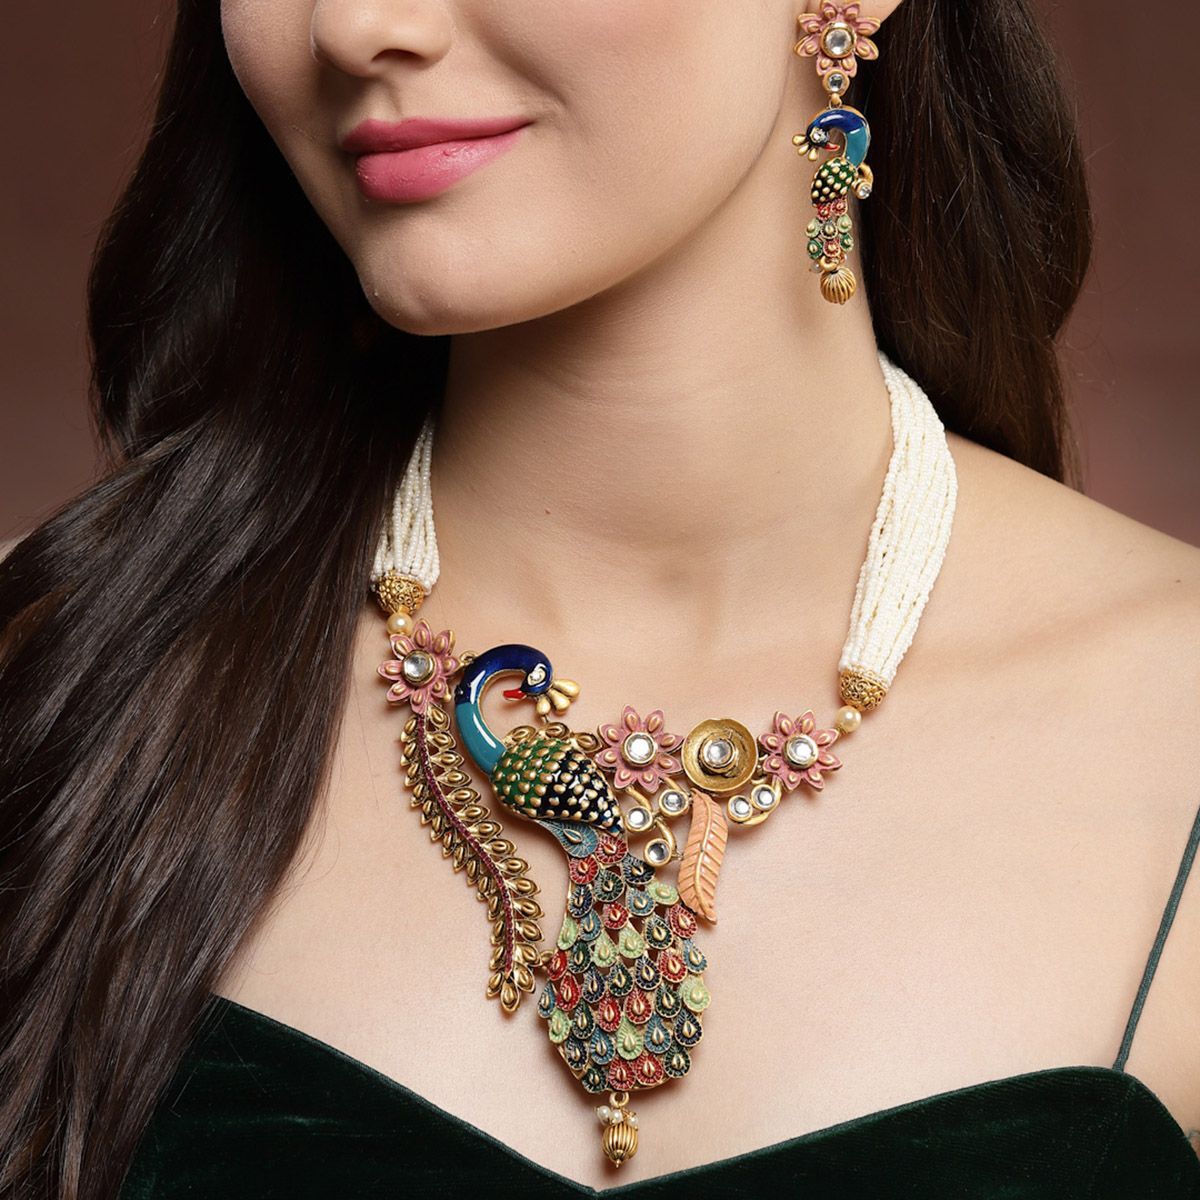 Buy Meenakari Earrings Online In India At Best Price Offers | Tata CLiQ